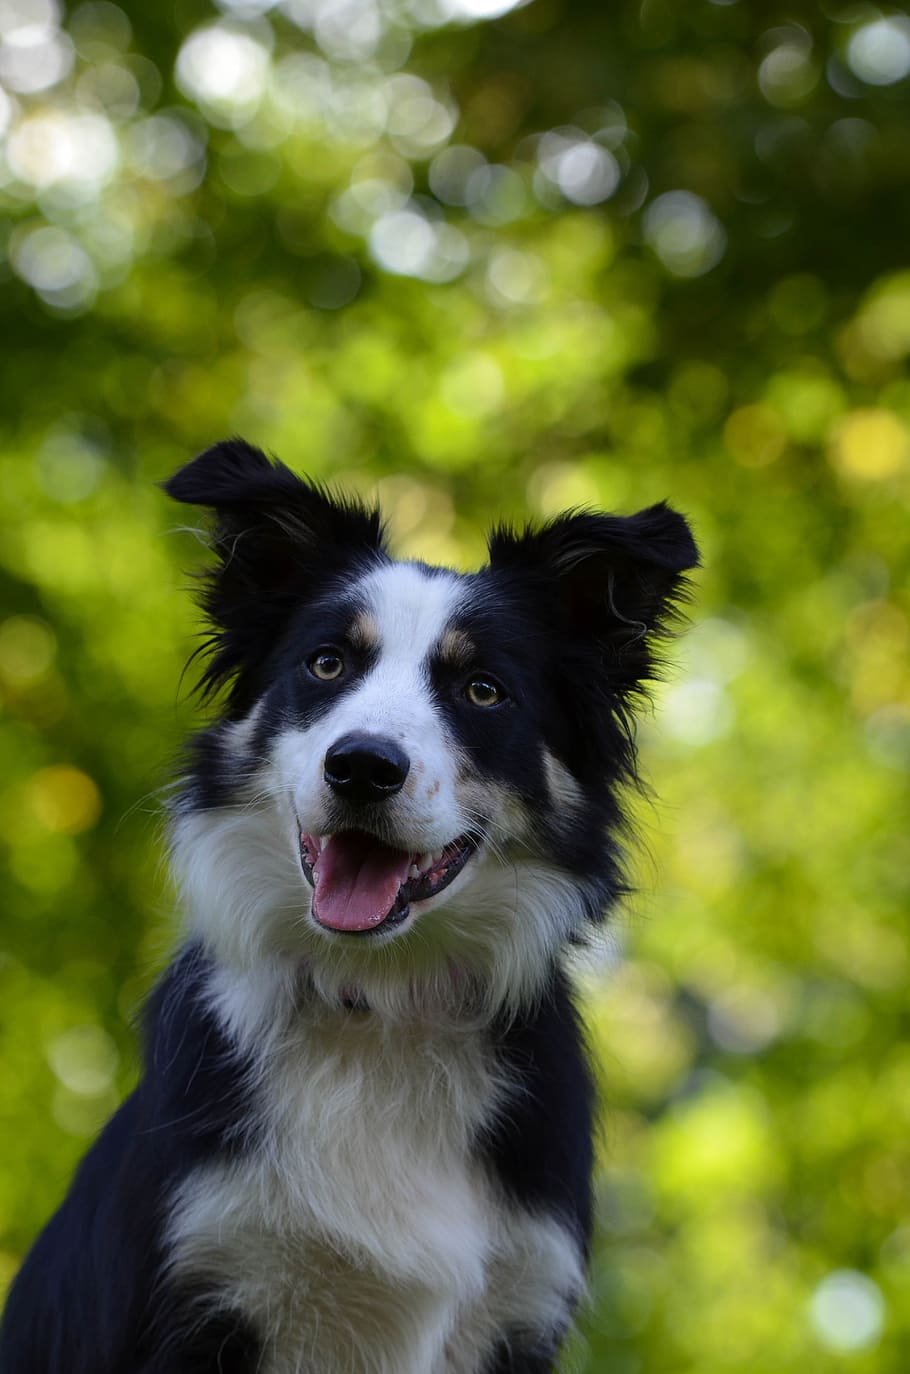 tilt shift lens photo, long-coated, white, black, dog, border collie, portrait, attention, curious, purebred dog